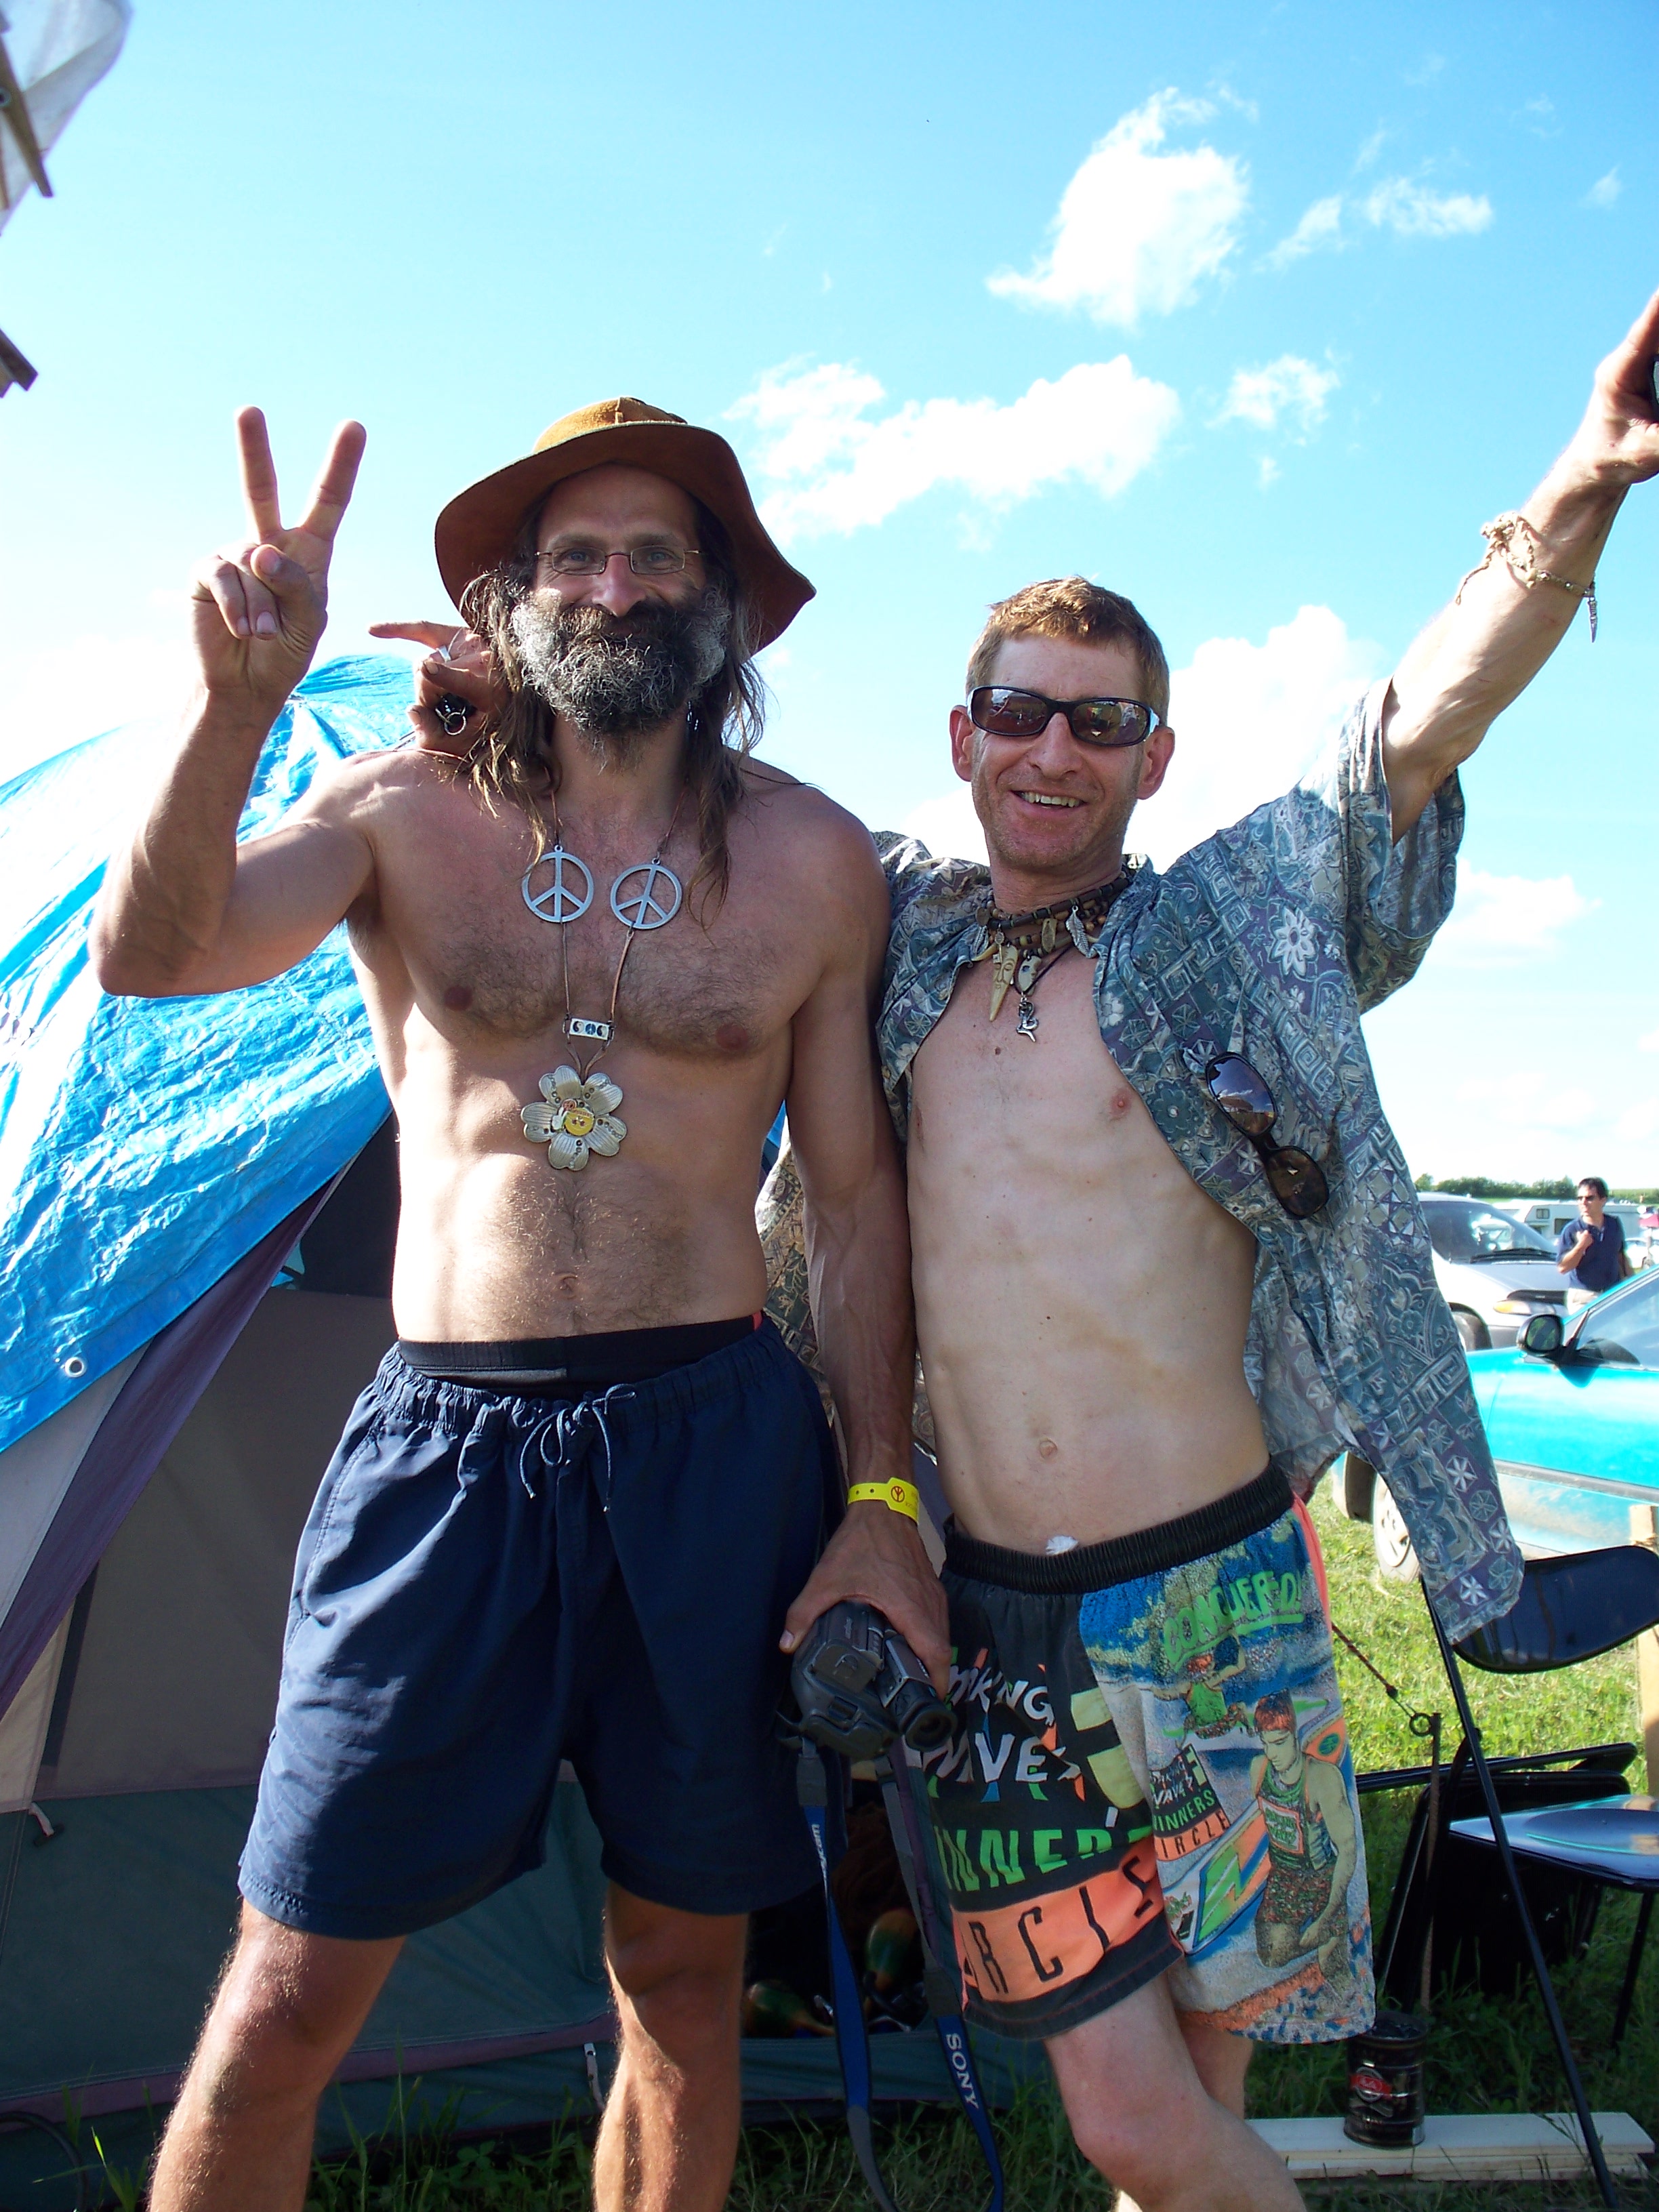 Vive Woodstock!